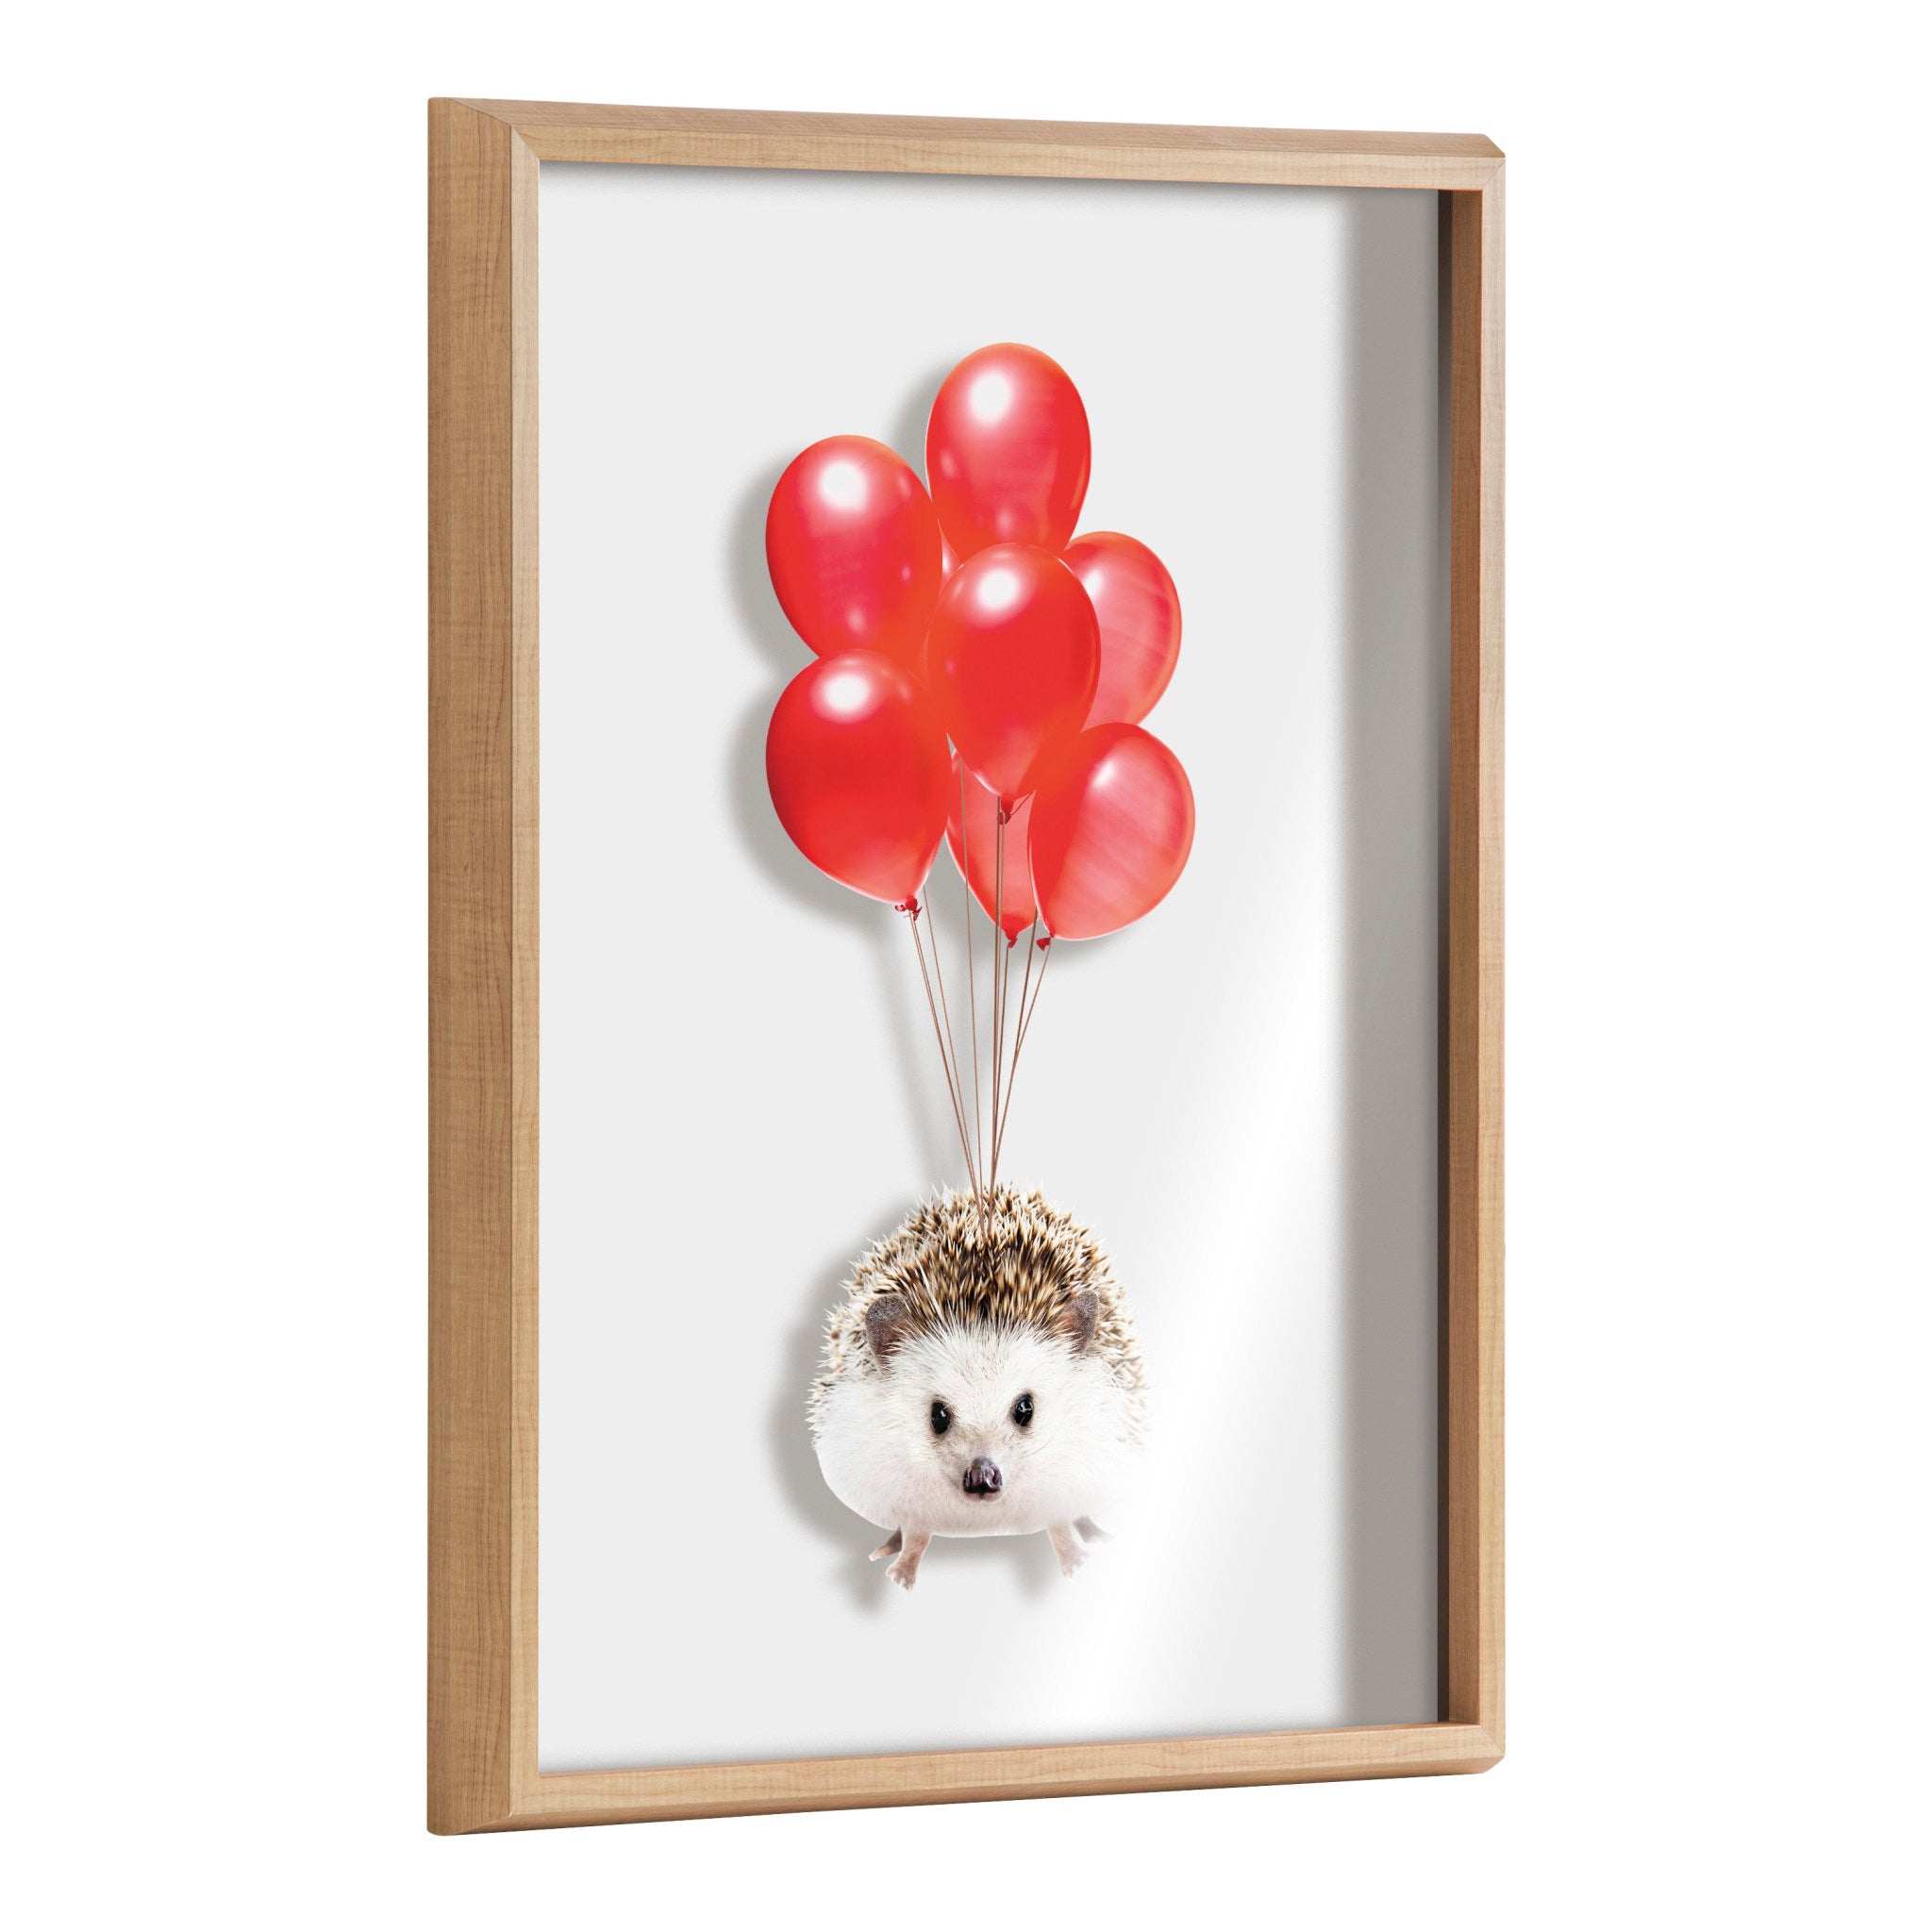 Blake Hedgehog Balloons Framed Printed Glass by Amy Peterson Art Studio